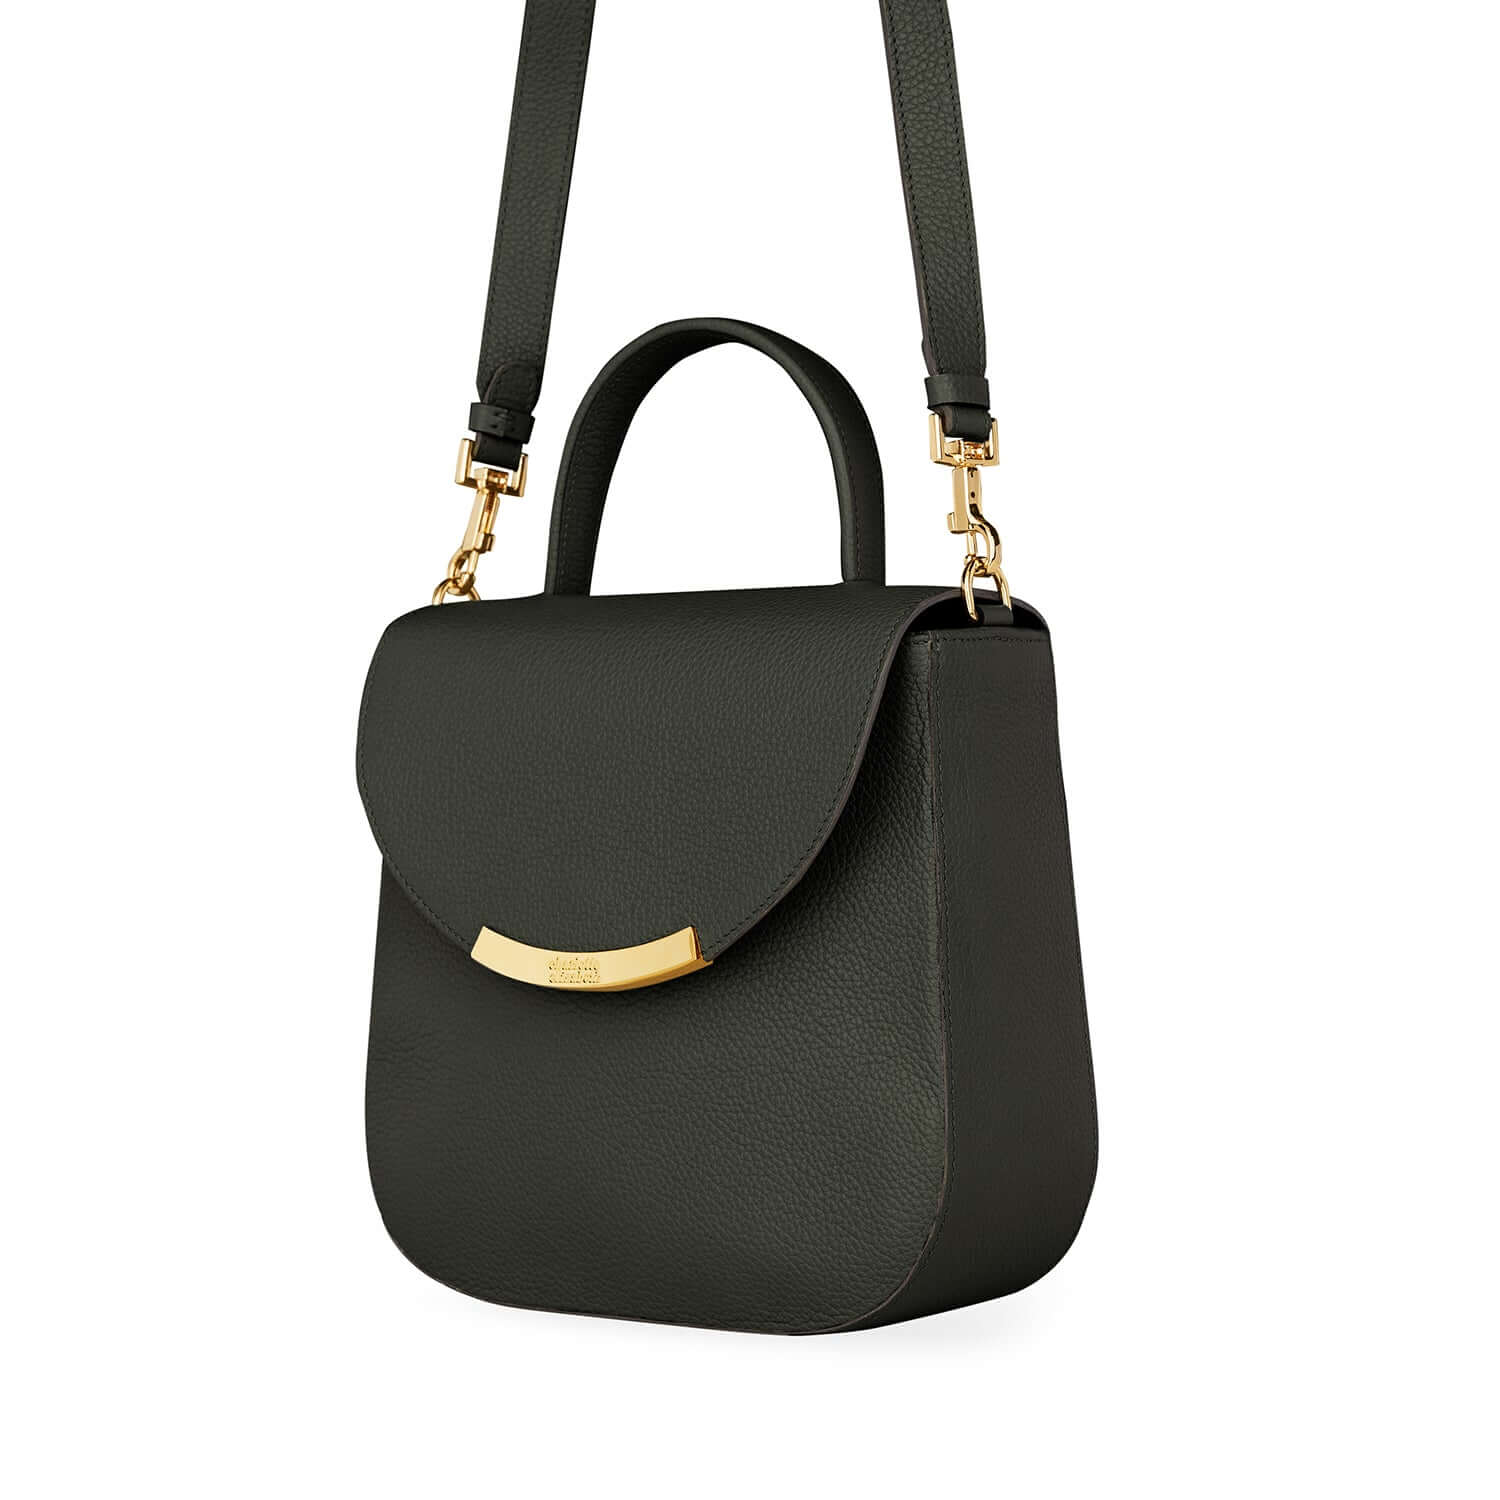 crossbody detachable strap handbag with handle made in london